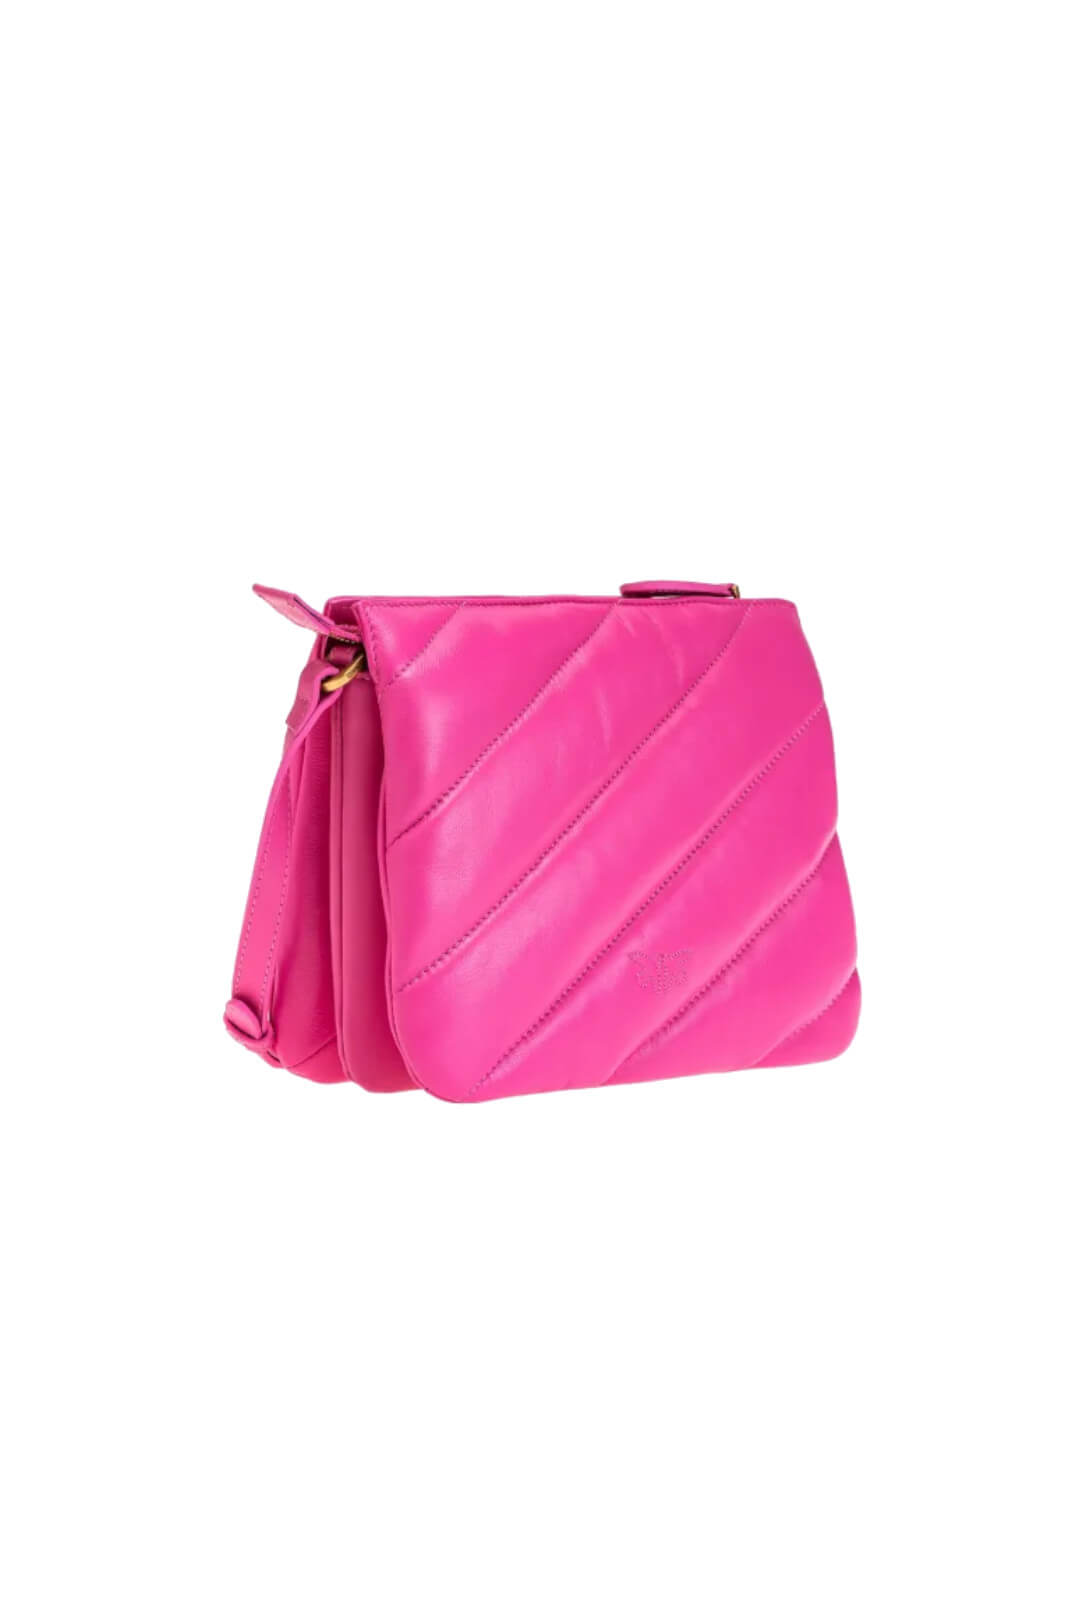 Pinko Women's Bag MINI TWINS BAG MAXI QUILT